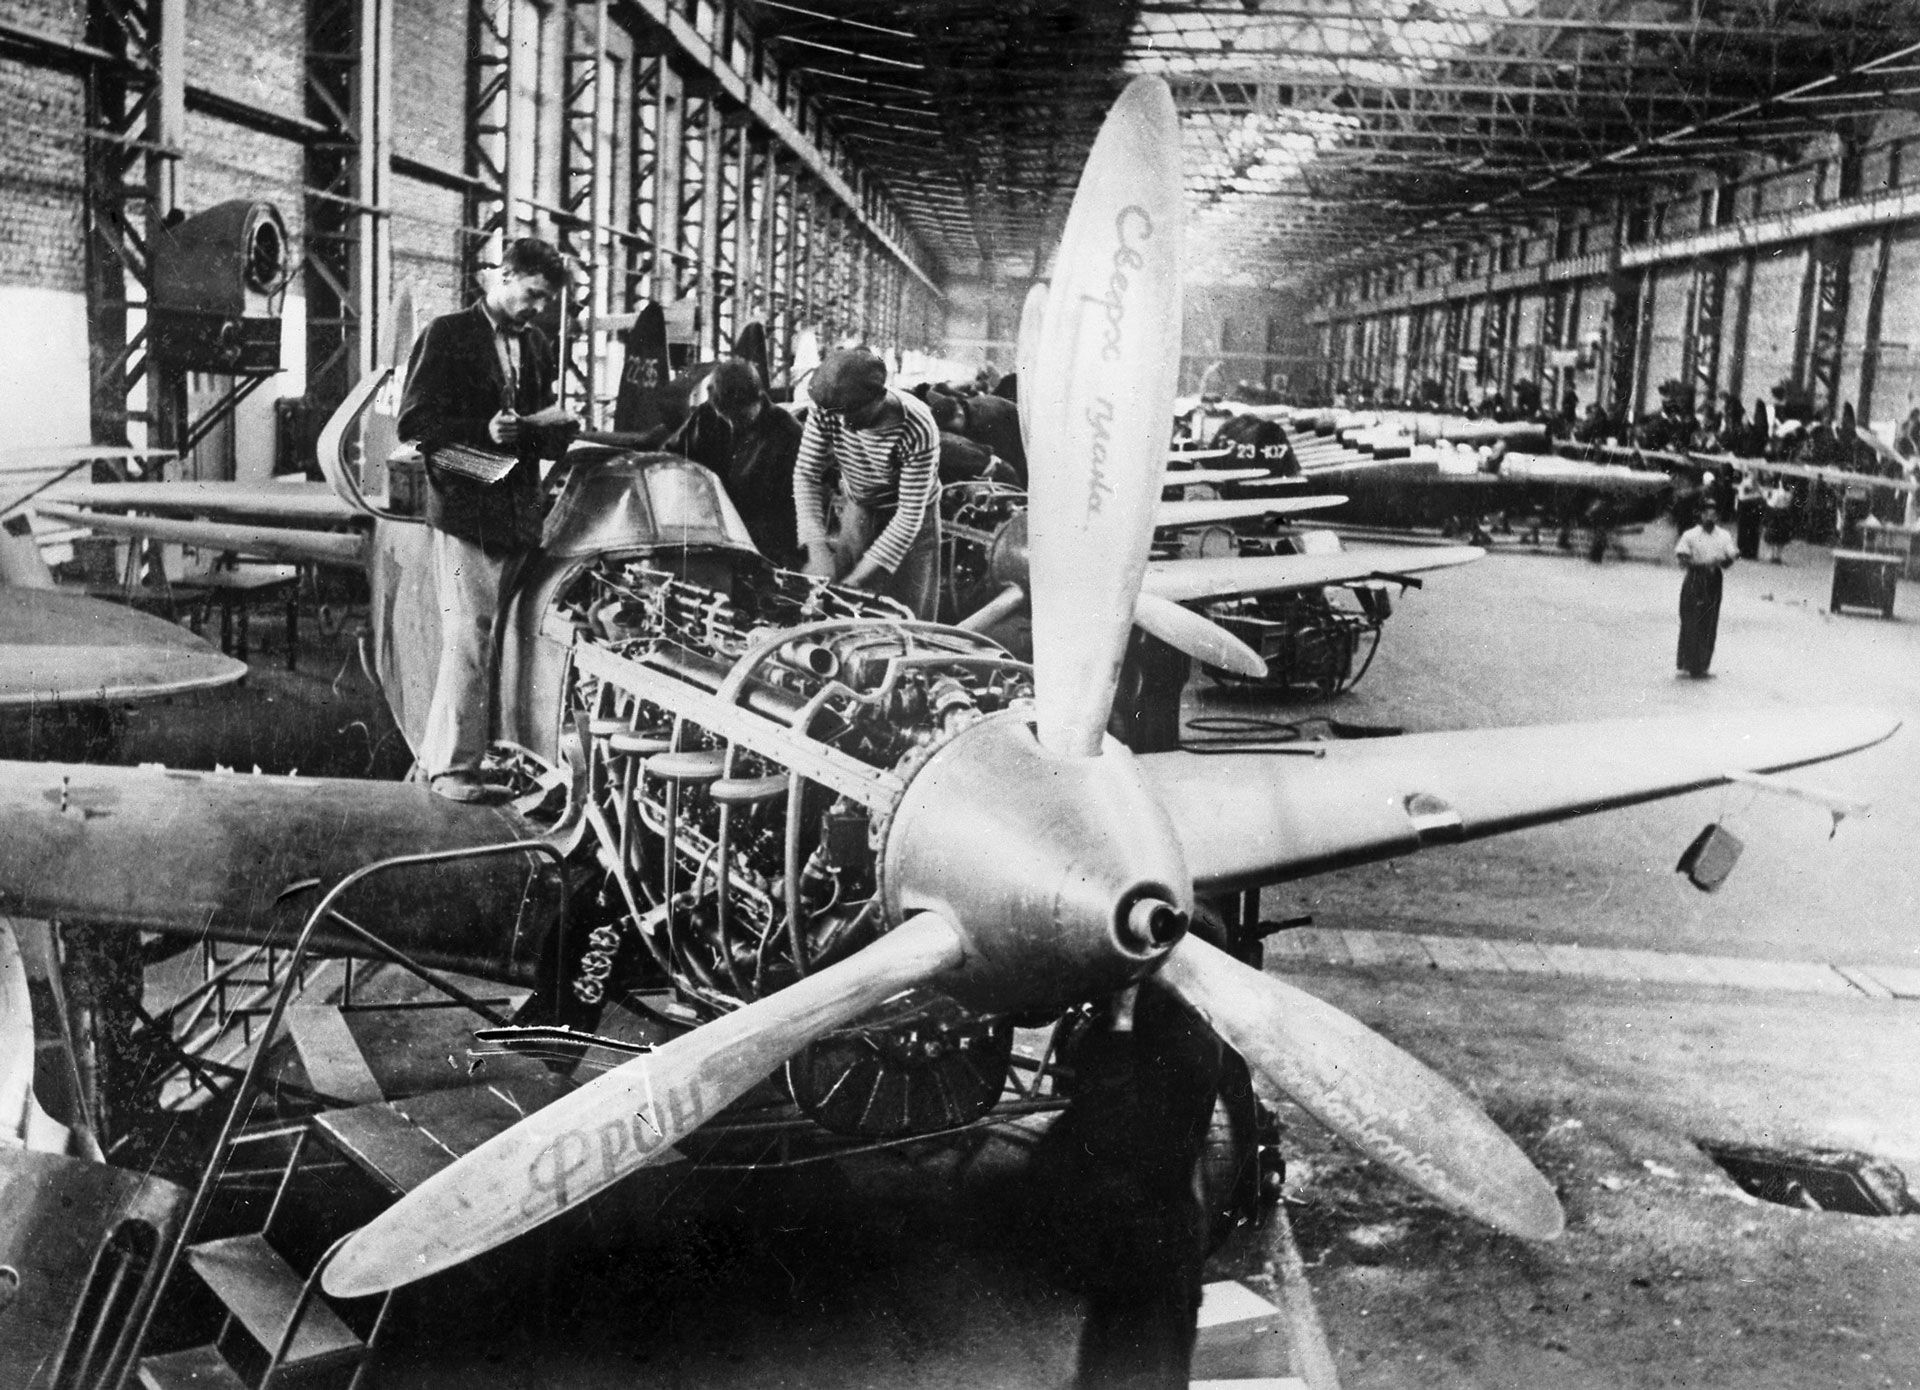 Assembling Yak-7 fighters in the workshop of the Novosibirsk Aviation V.P. Chkalov Plant